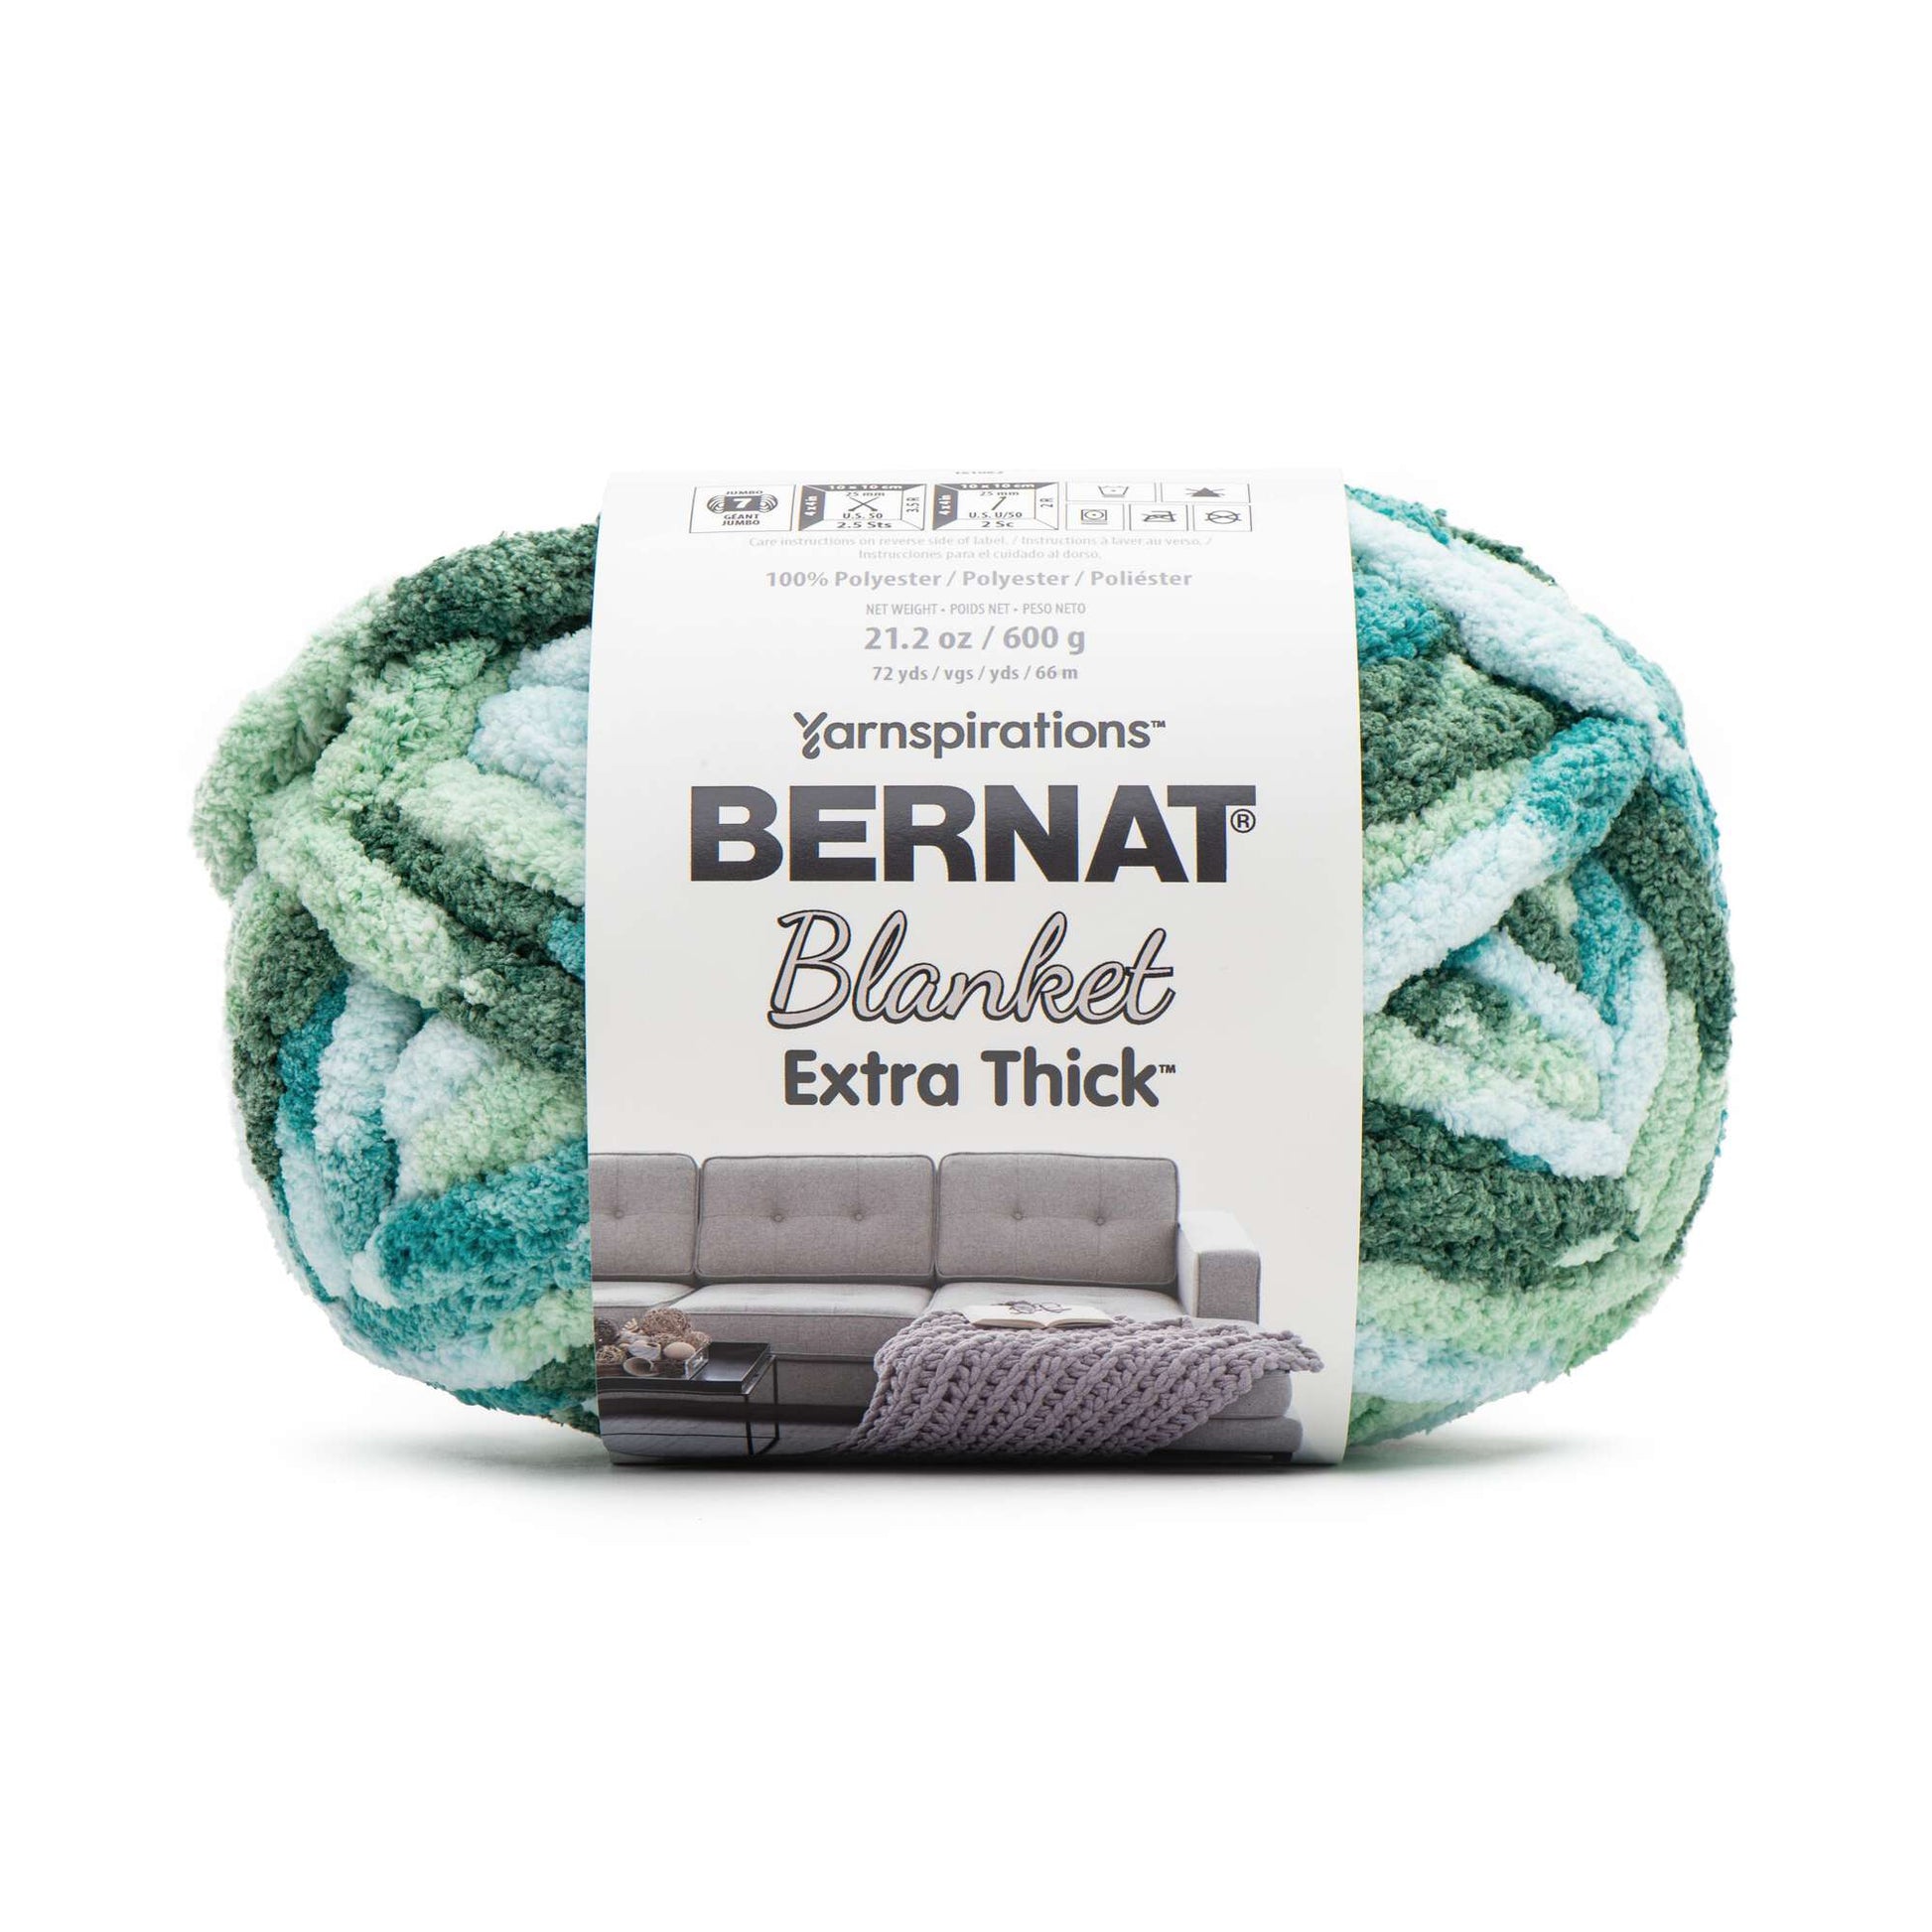 Bernat Blanket Extra Thick Crochet Yarn in Blue Mist | Size: 600g/21.2oz | Pattern: Crochet | by Yarnspirations